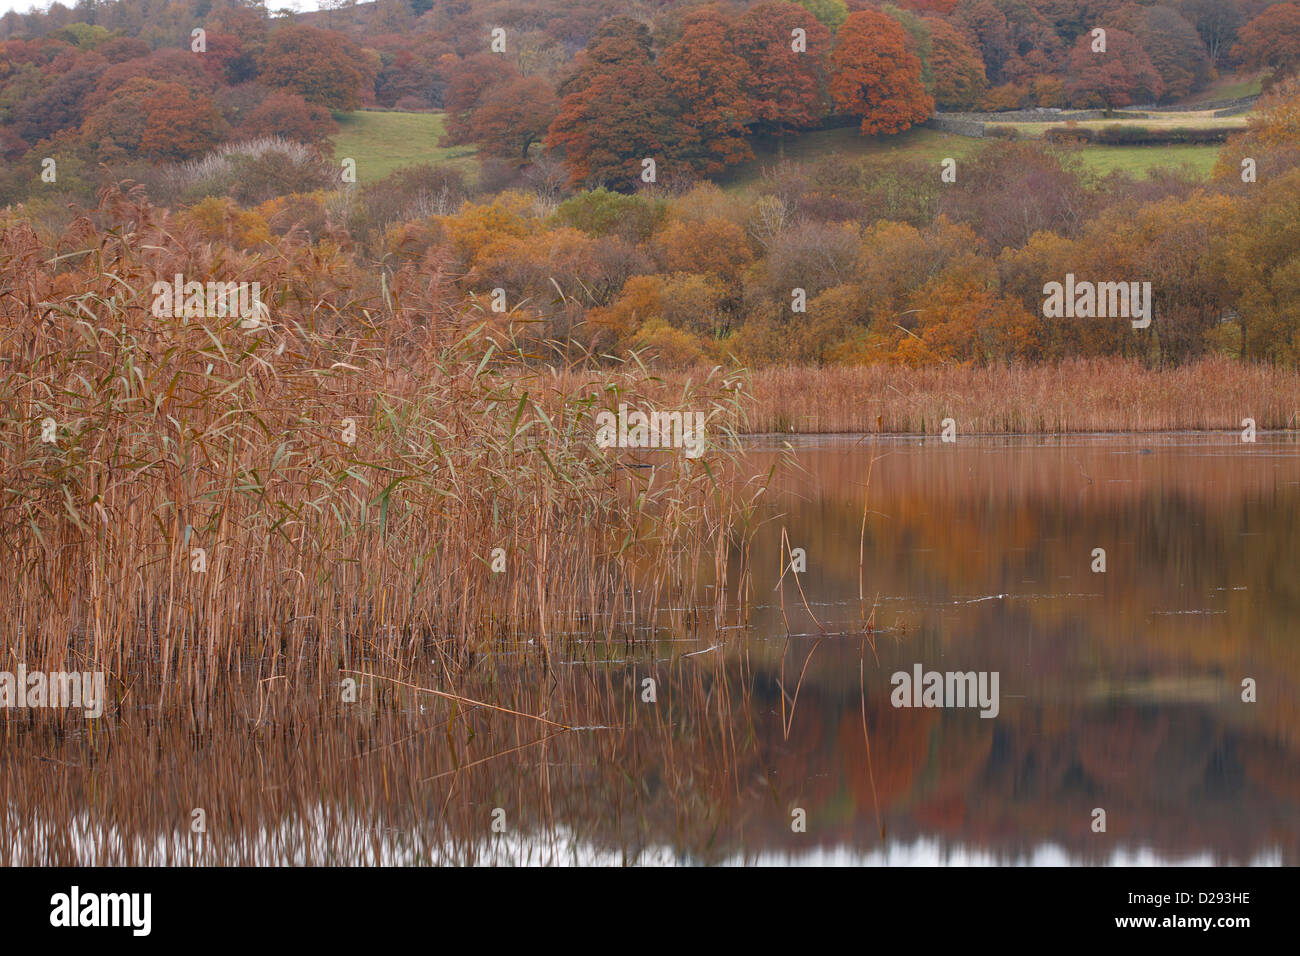 Common Reeds (Phragmites australis) fringing a lake in Autumn. Esthwaite Water, Lake district, Cumbria. England. October. Stock Photo